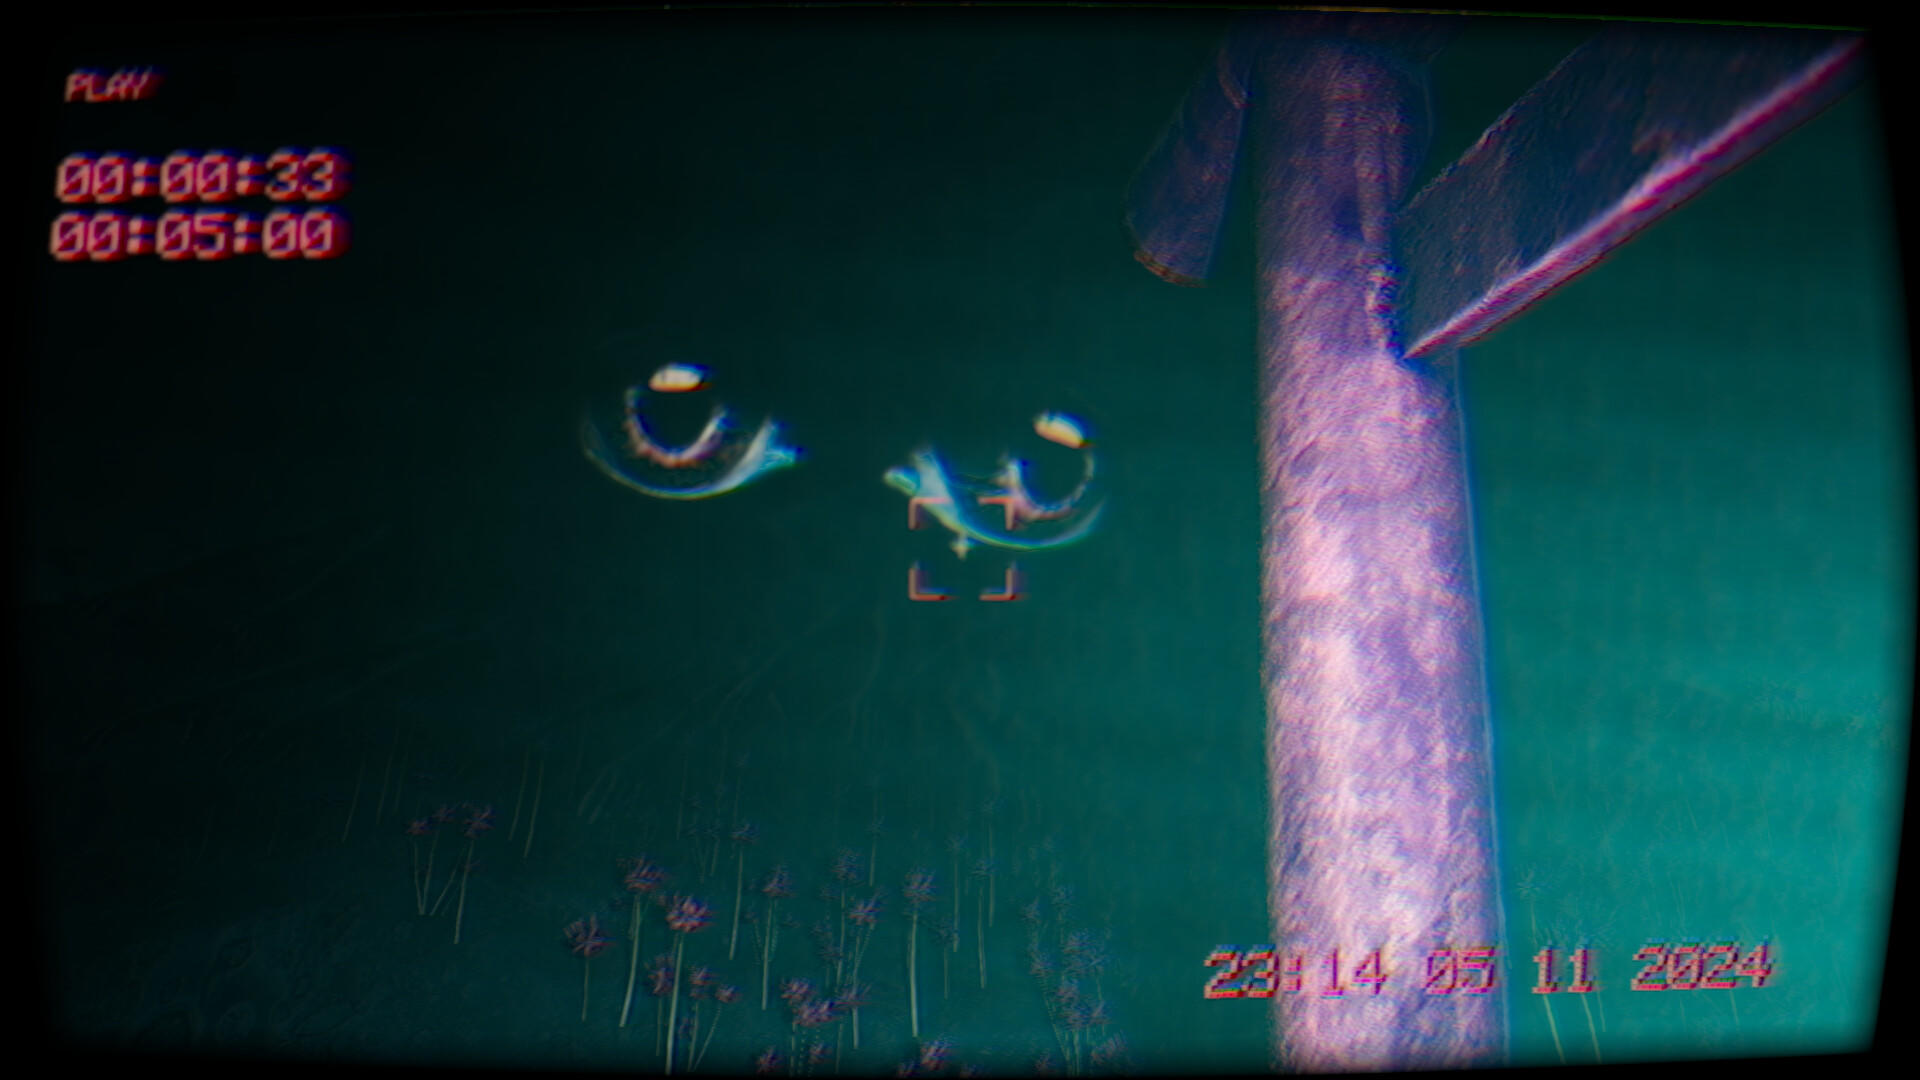 Screenshot 1 of trong đoạn phim 